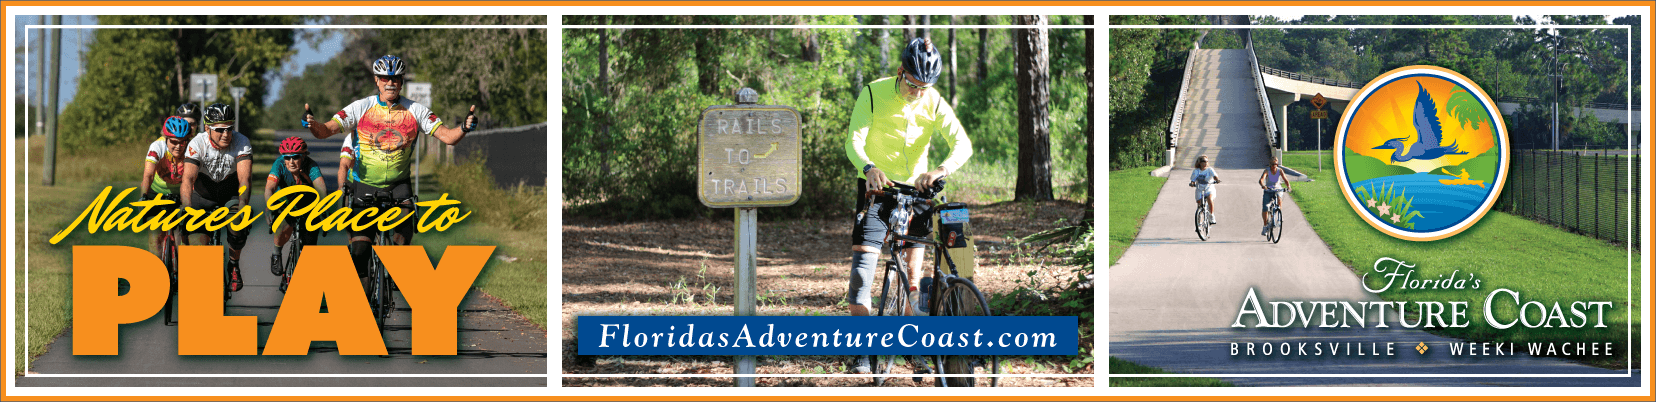 biking on floridas adventure coast